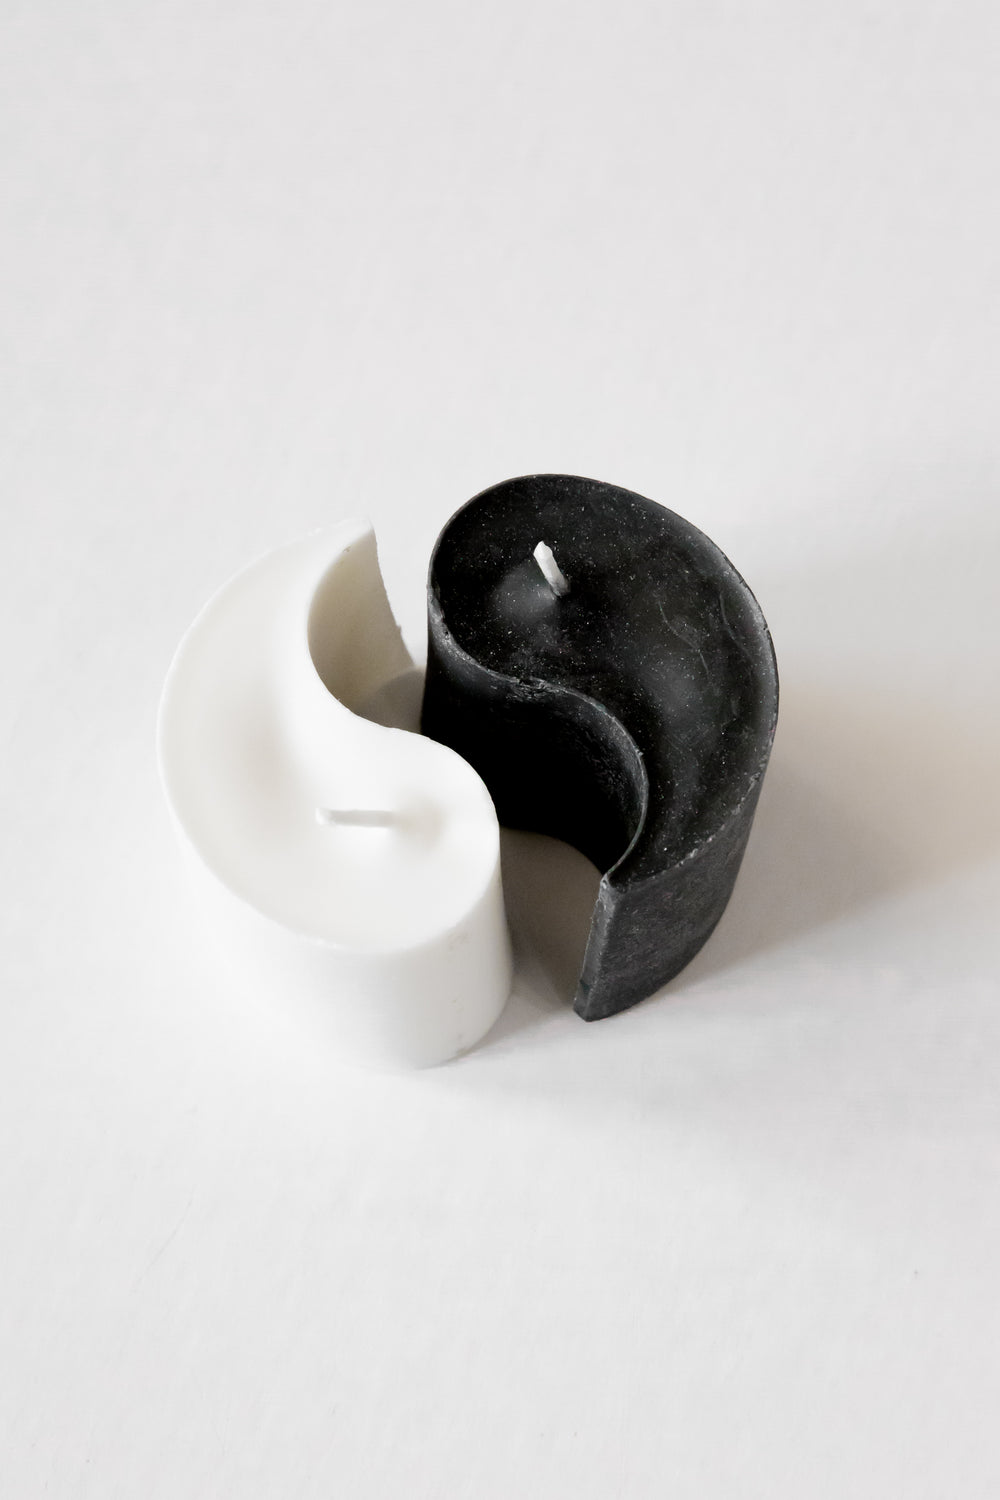 Black + White Yin Yang Candle